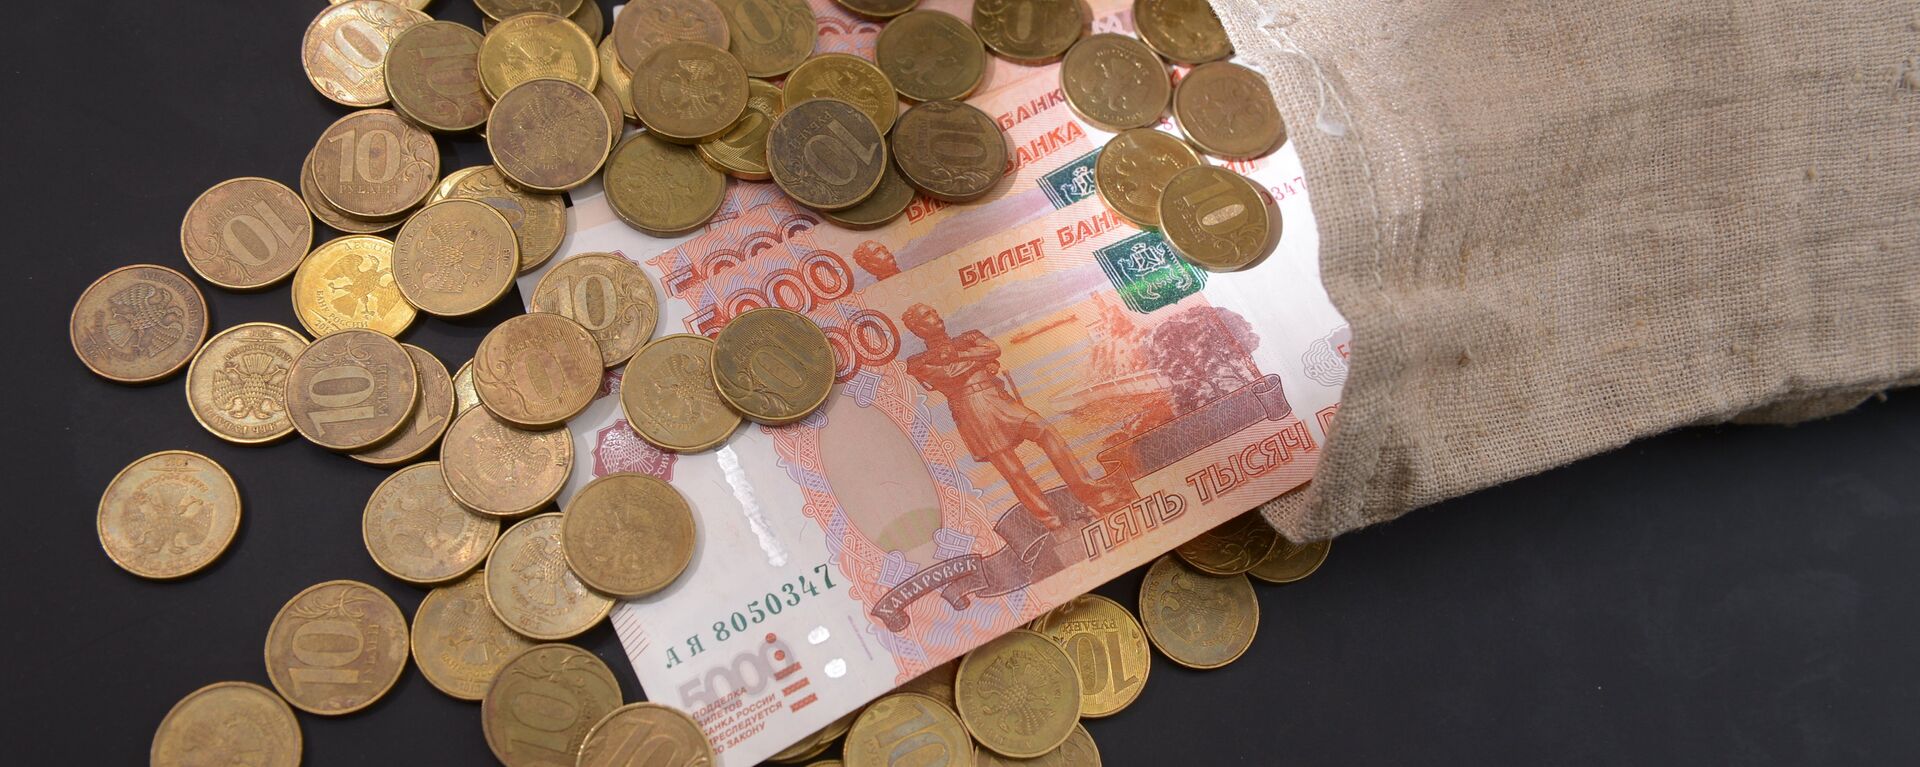 Monedas y billetes del rublo ruso - Sputnik Mundo, 1920, 21.08.2021